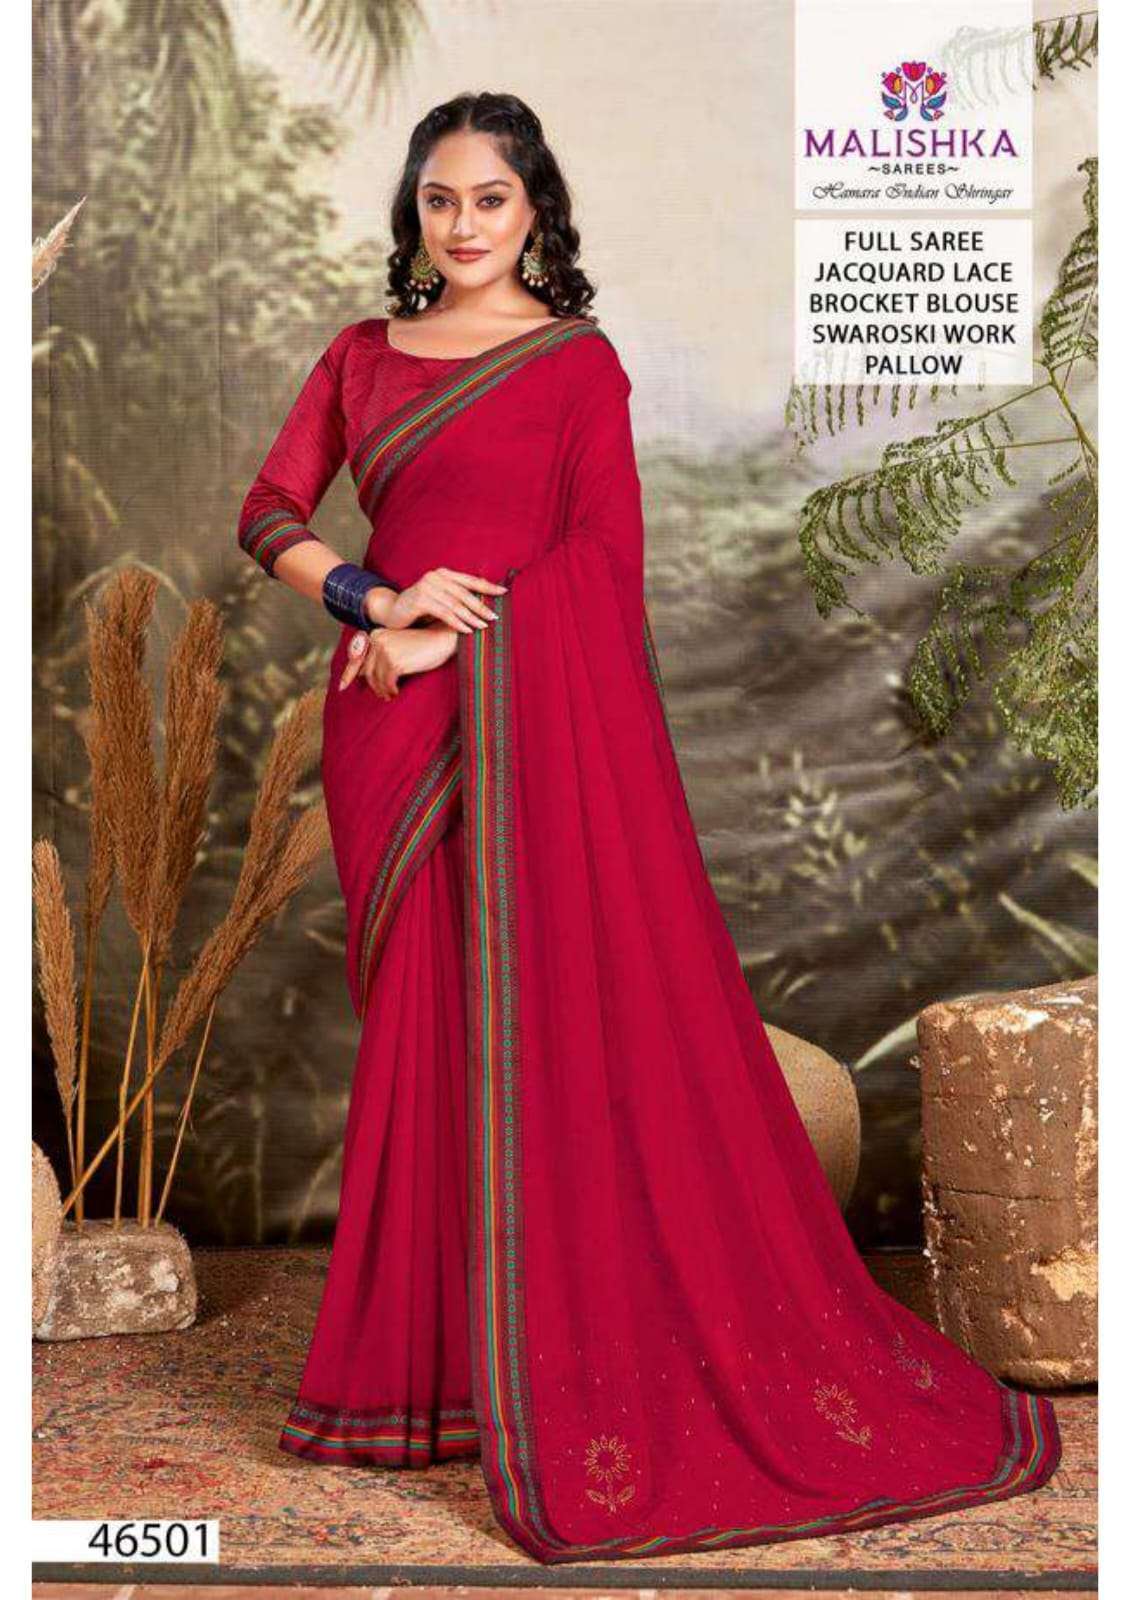 Buy online saree, Pink georgette exclusive sarees, U neck blouse